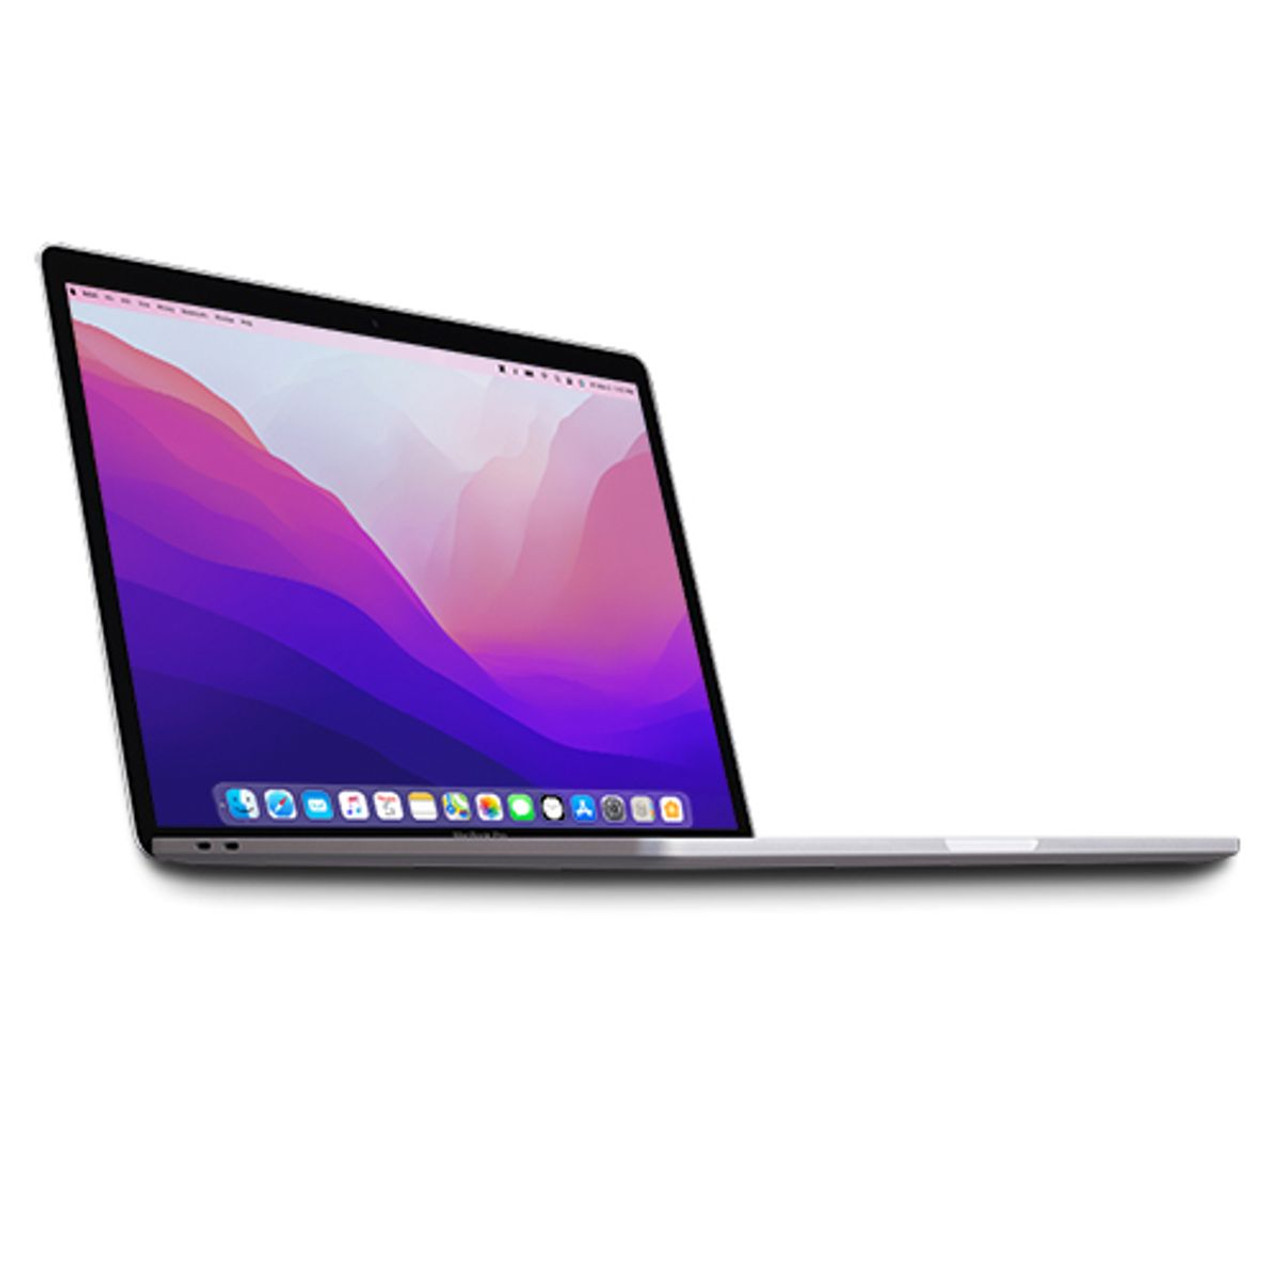 Apple® MacBook Pro, 8GB RAM, 128GB SSD, MPXR2LL/A (2017 Release) product image